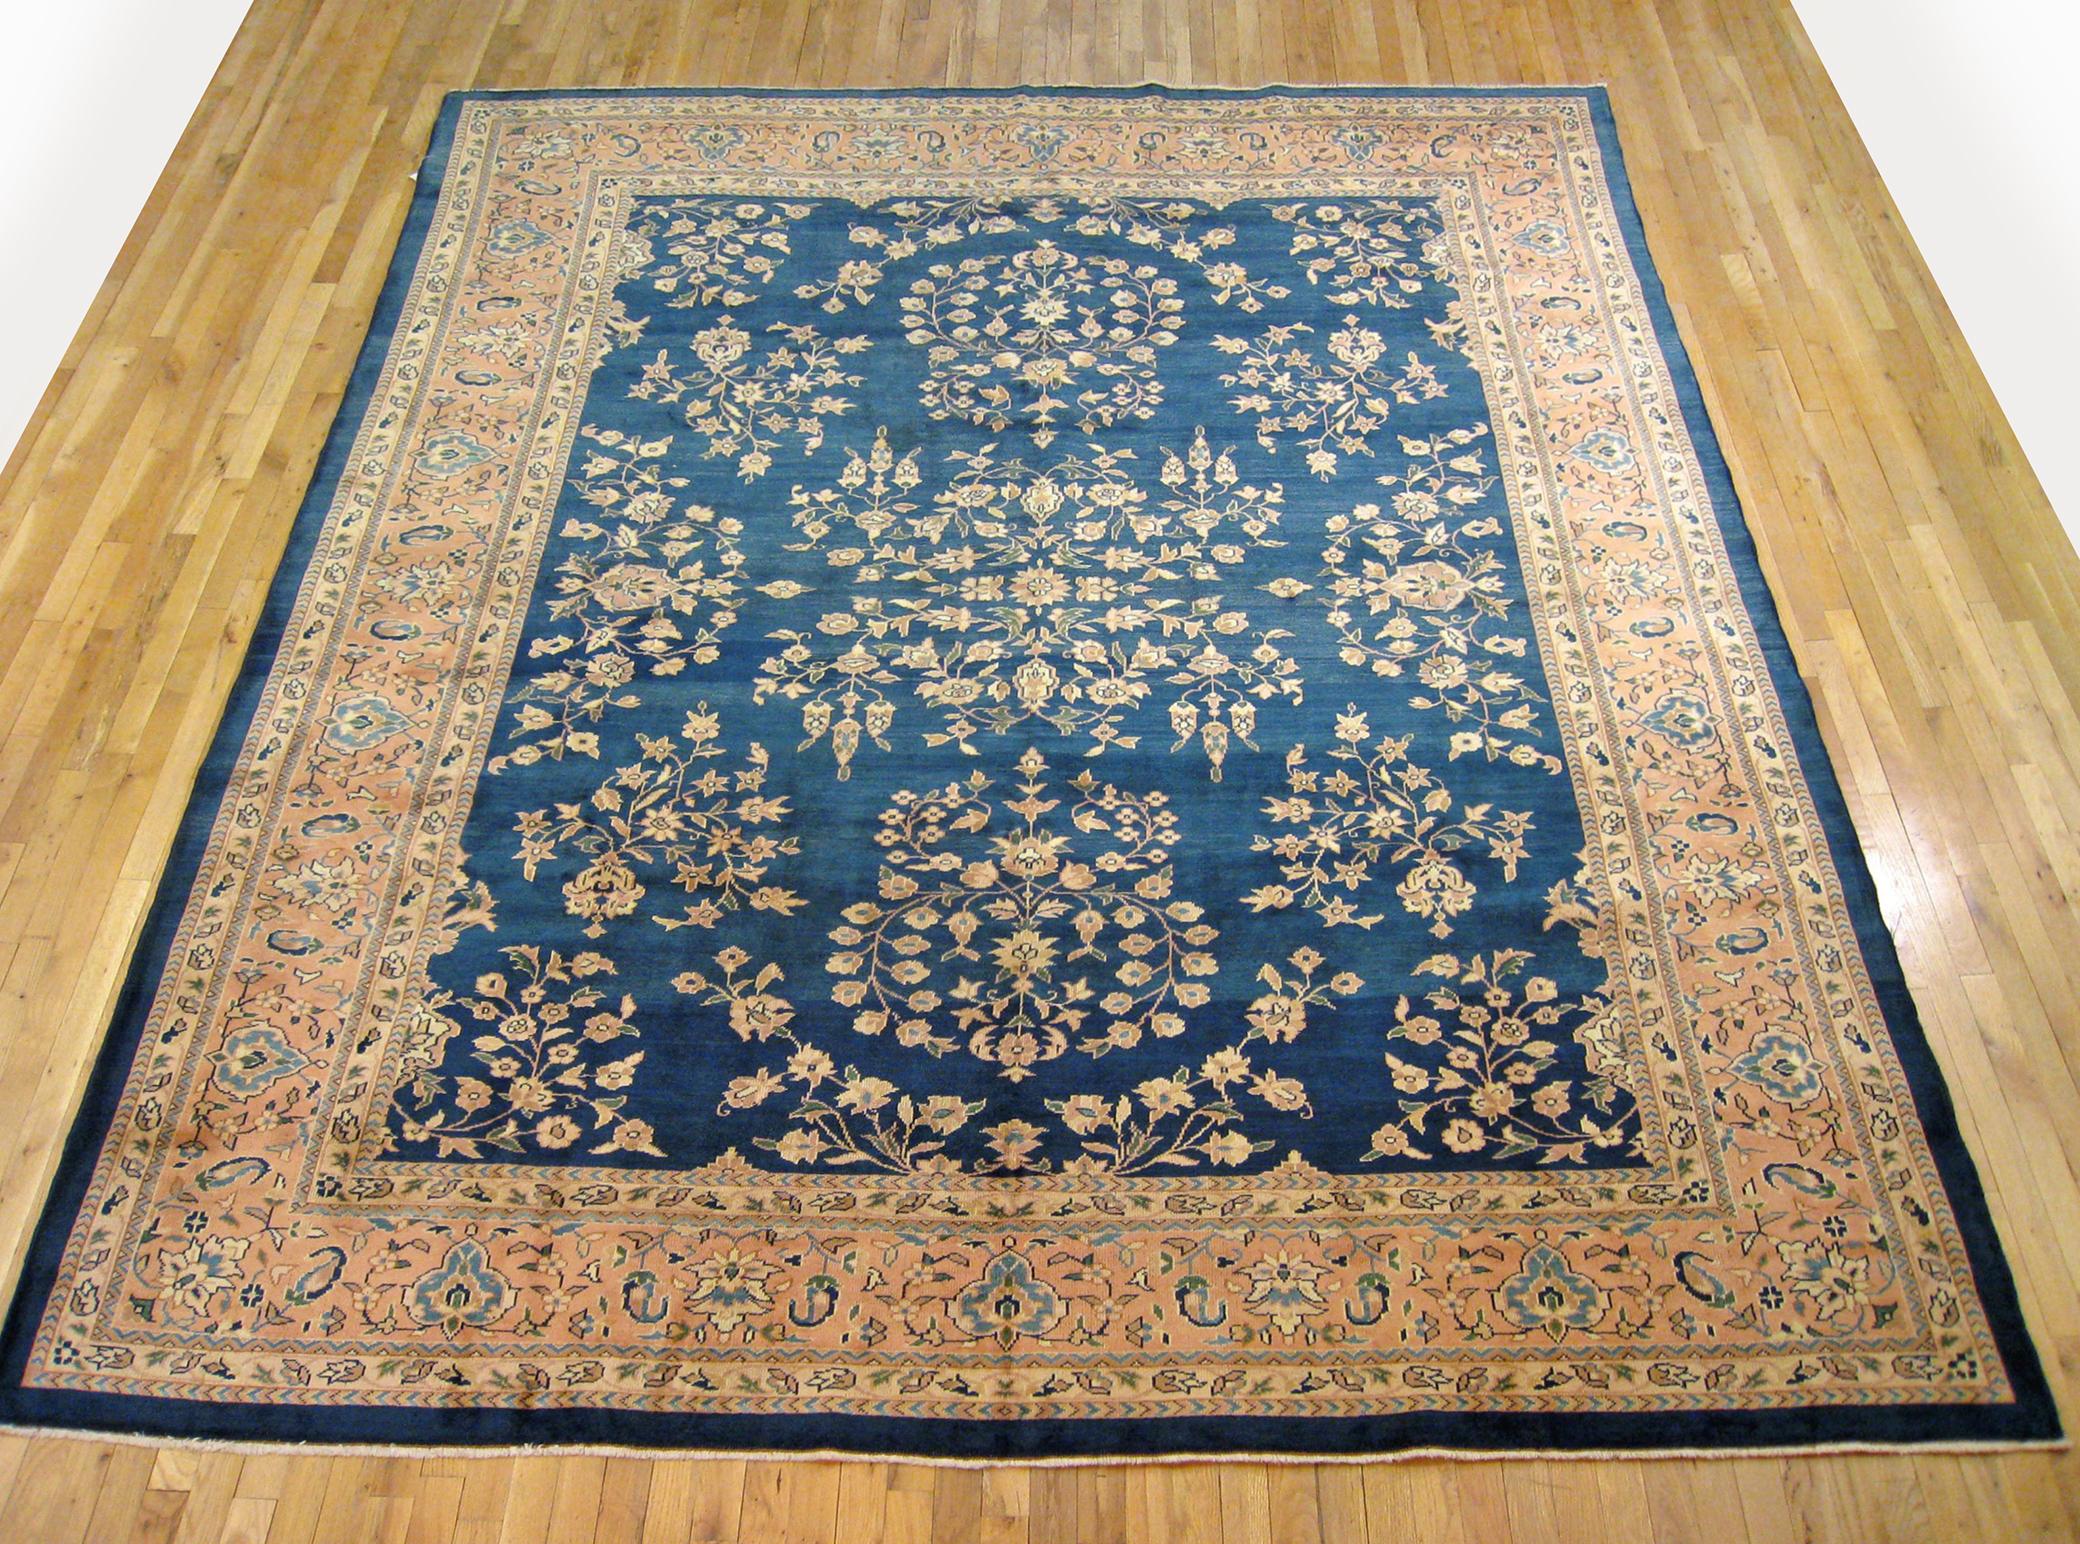 Antique Indian rug, size 11'7